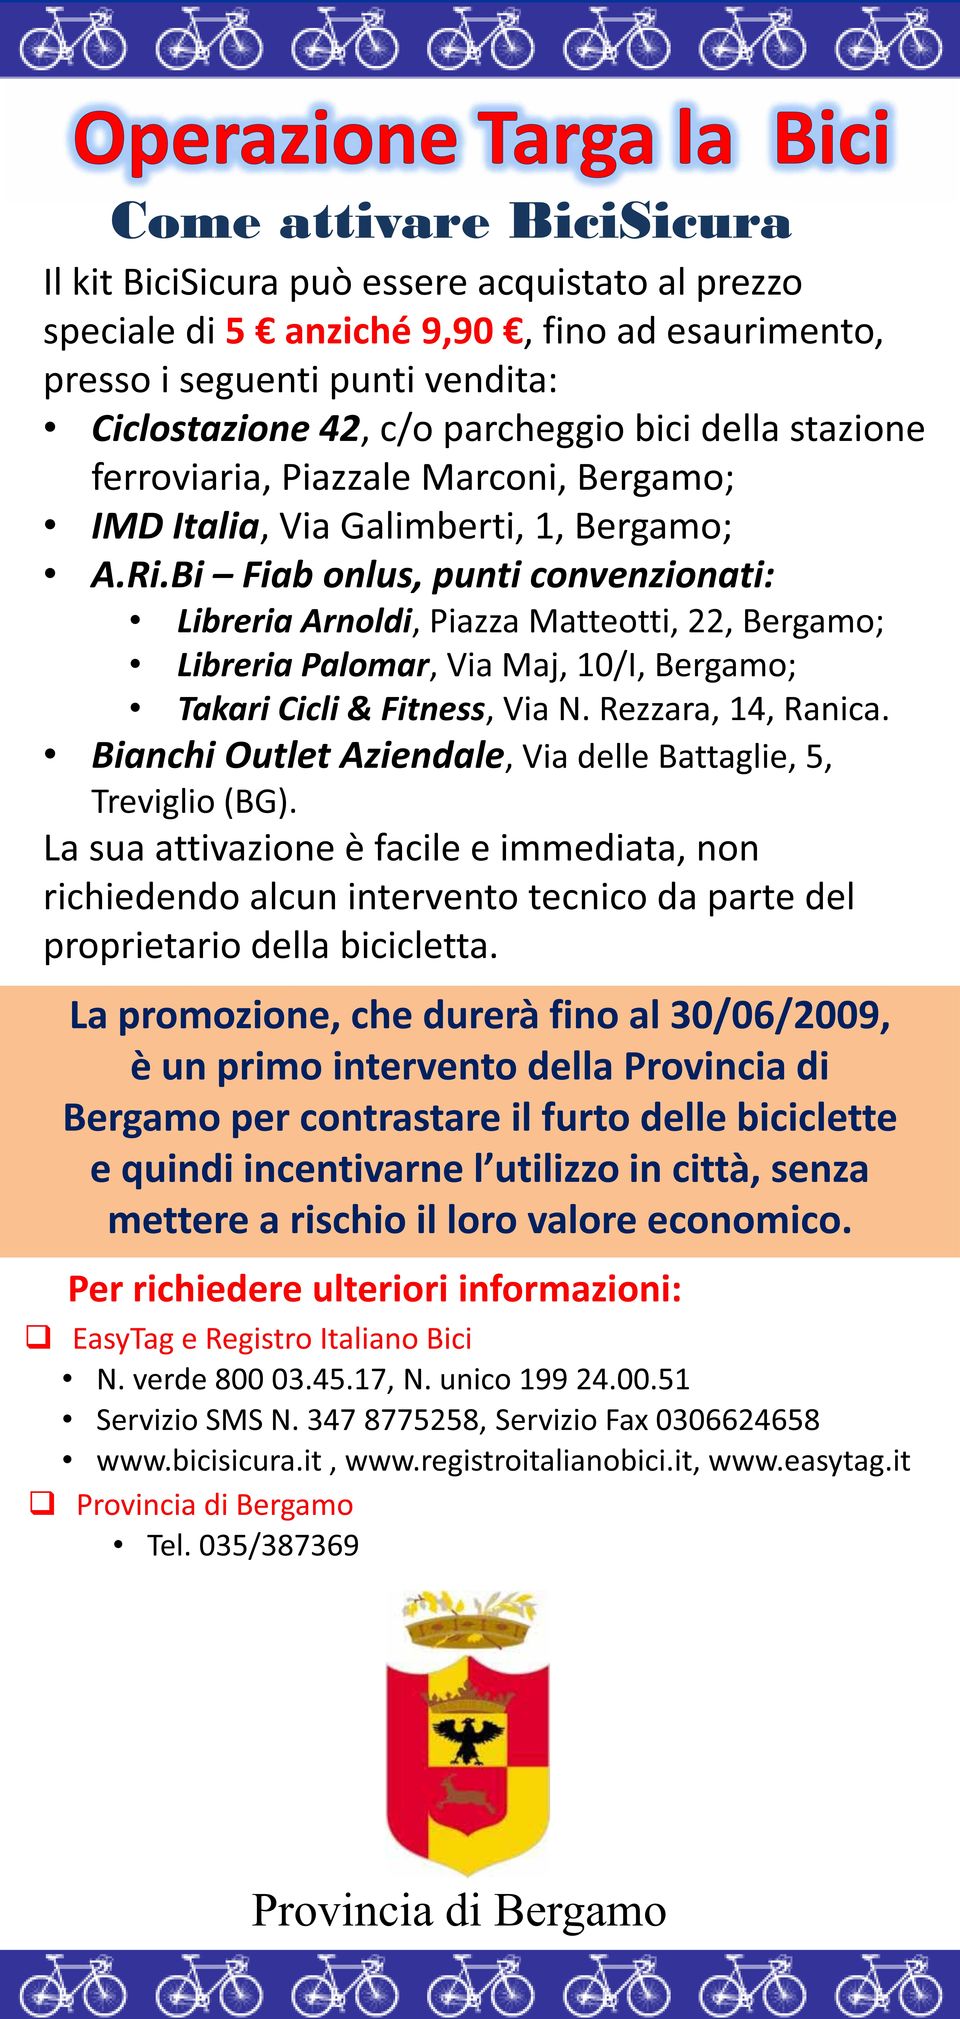 Bi Fiab onlus, punti convenzionati: Libreria Arnoldi, Piazza Matteotti, 22, Bergamo; Libreria Palomar, Via Maj, 10/I, Bergamo; Takari Cicli & Fitness, Via N. Rezzara, 14, Ranica.